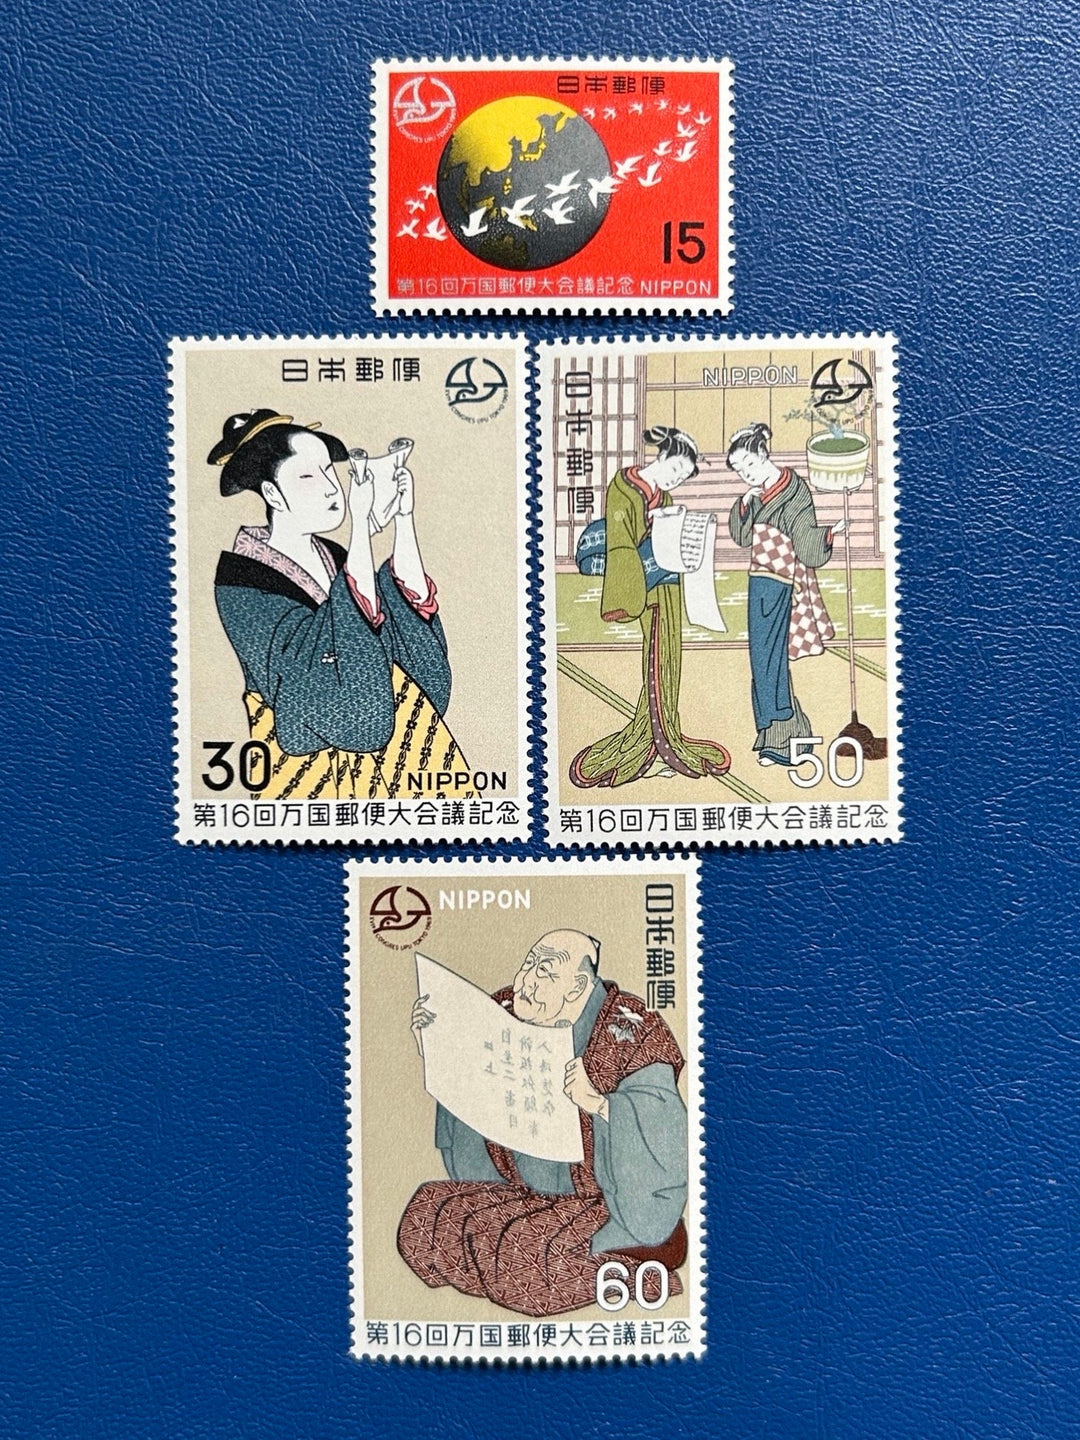 Japan - Original Vintage Postage Stamps- 1969 - UPU: Letter Reading - for the collector, artist or crafter